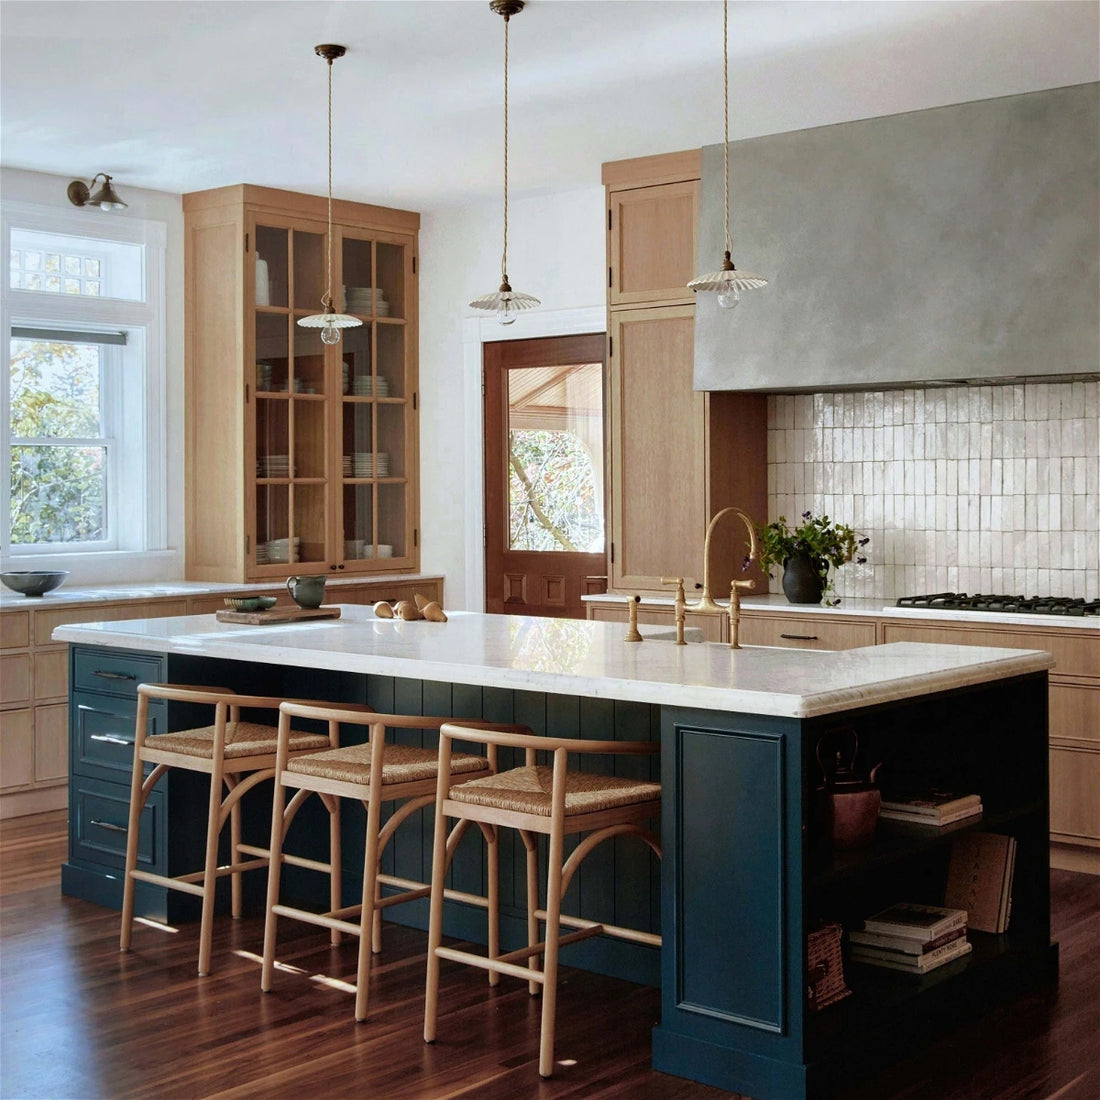 Choosing Tile Kitchen Backsplash